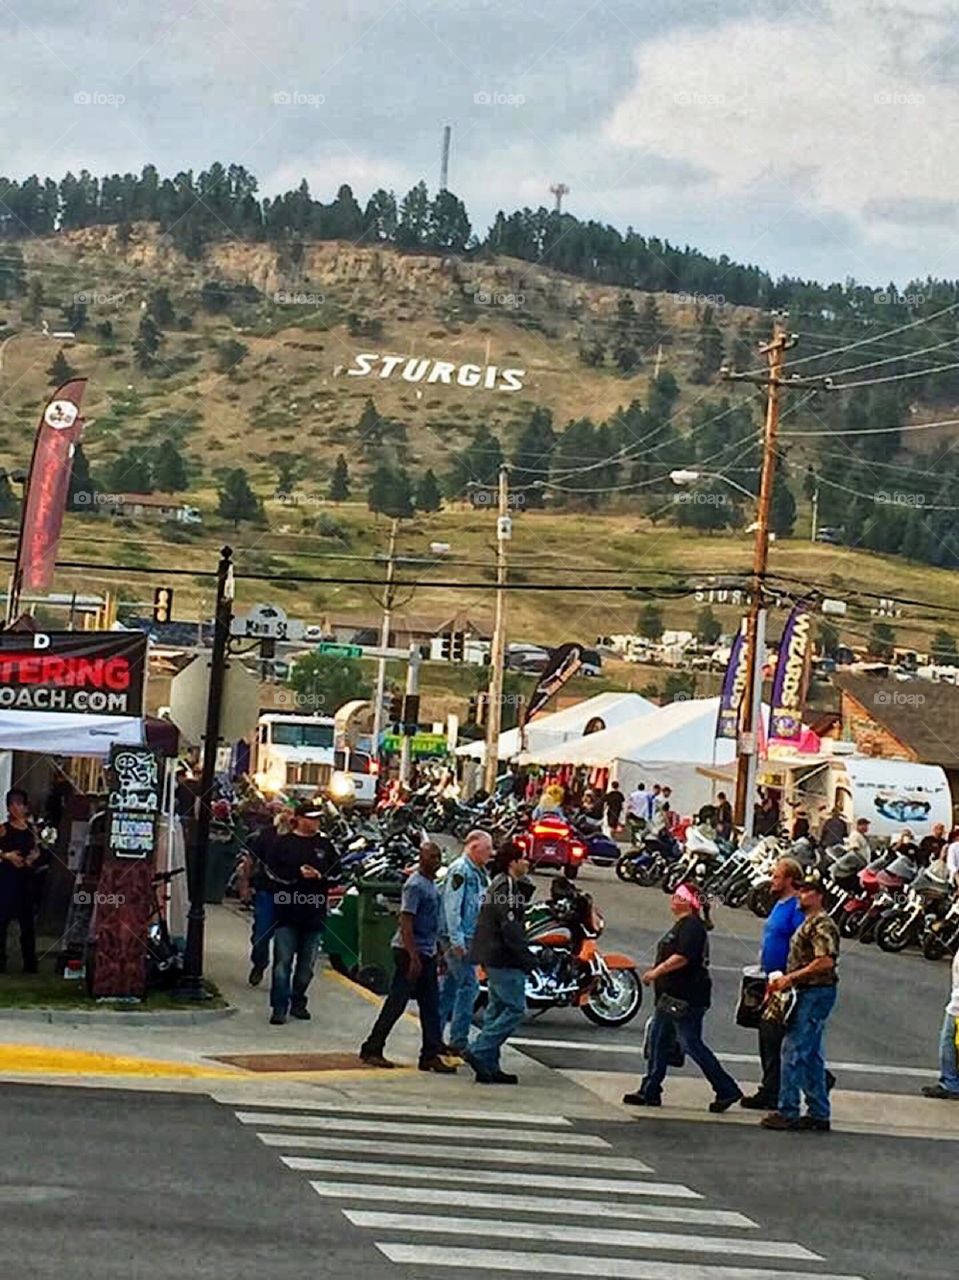 Bike week sturgis South Dakota motorcycle rally 